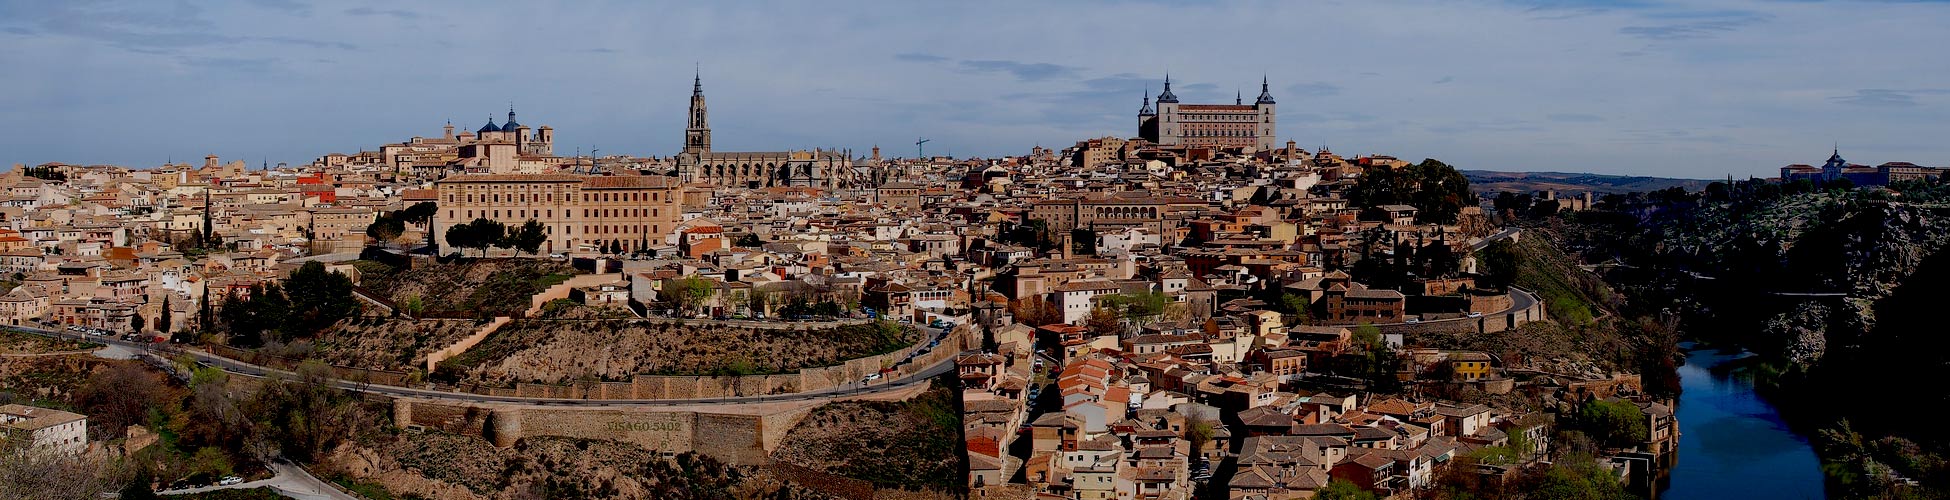 Toledo Tourist Information